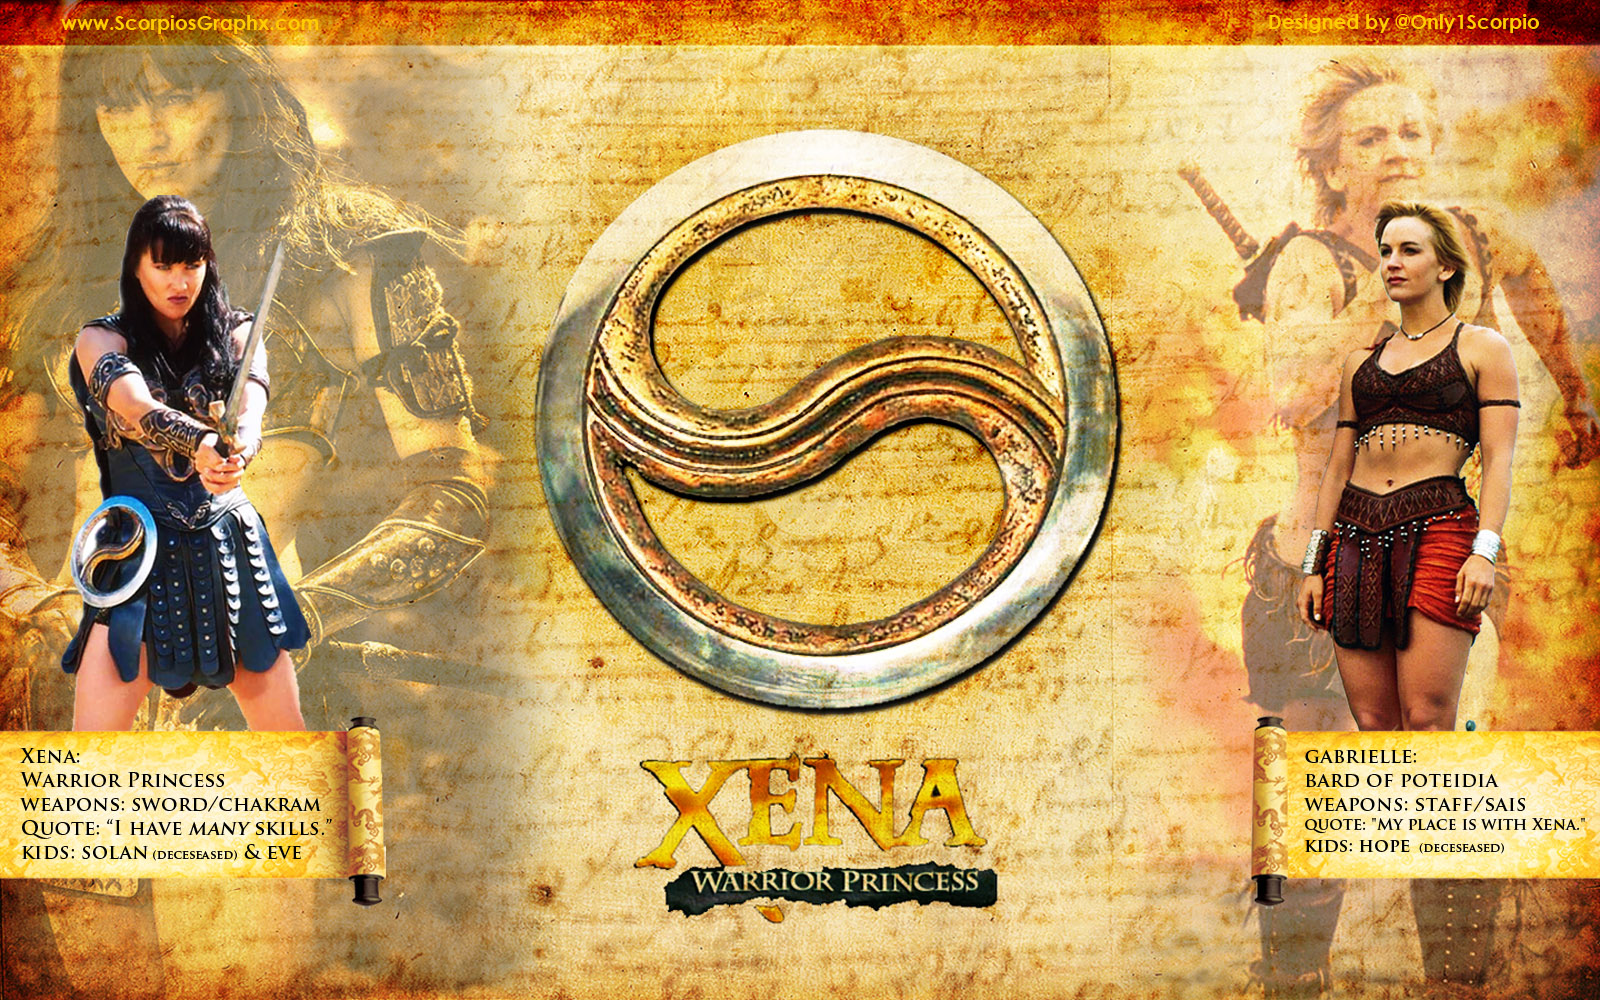 xena: warrior princess, tv show, xena (xena: warrior princess)